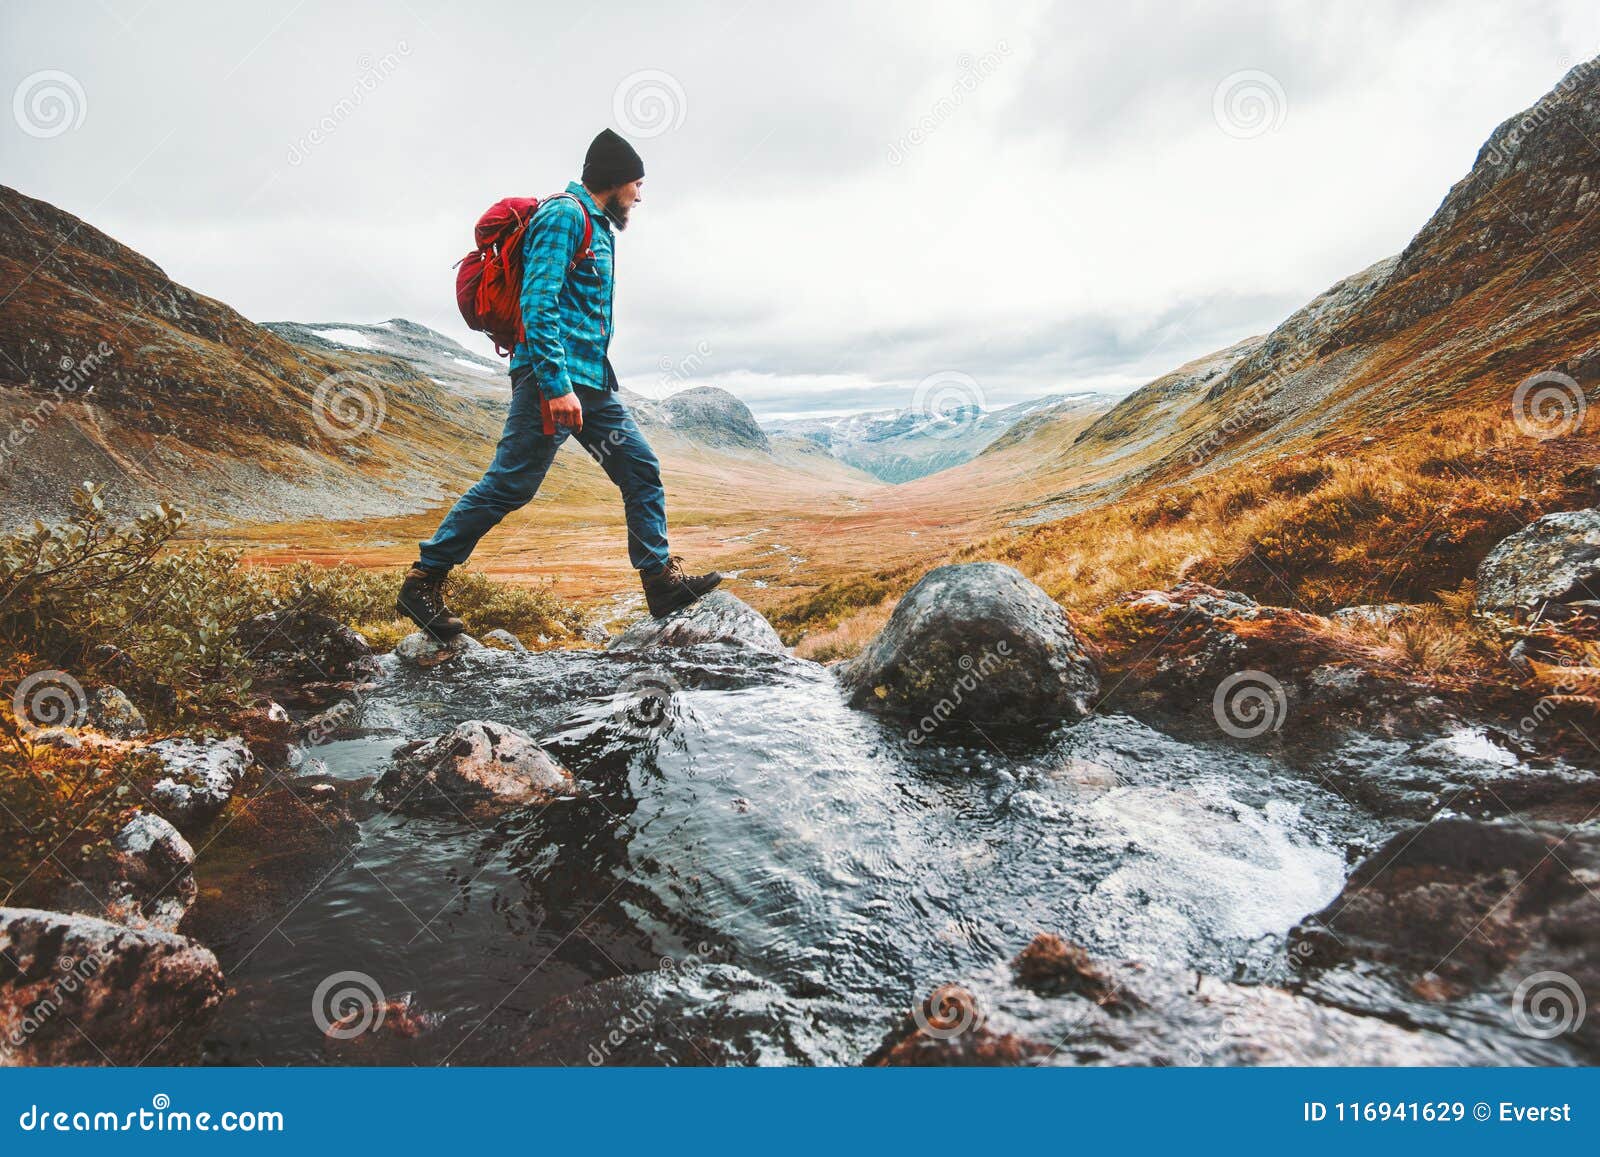 man solo traveling backpacker hiking in scandinavian mountains